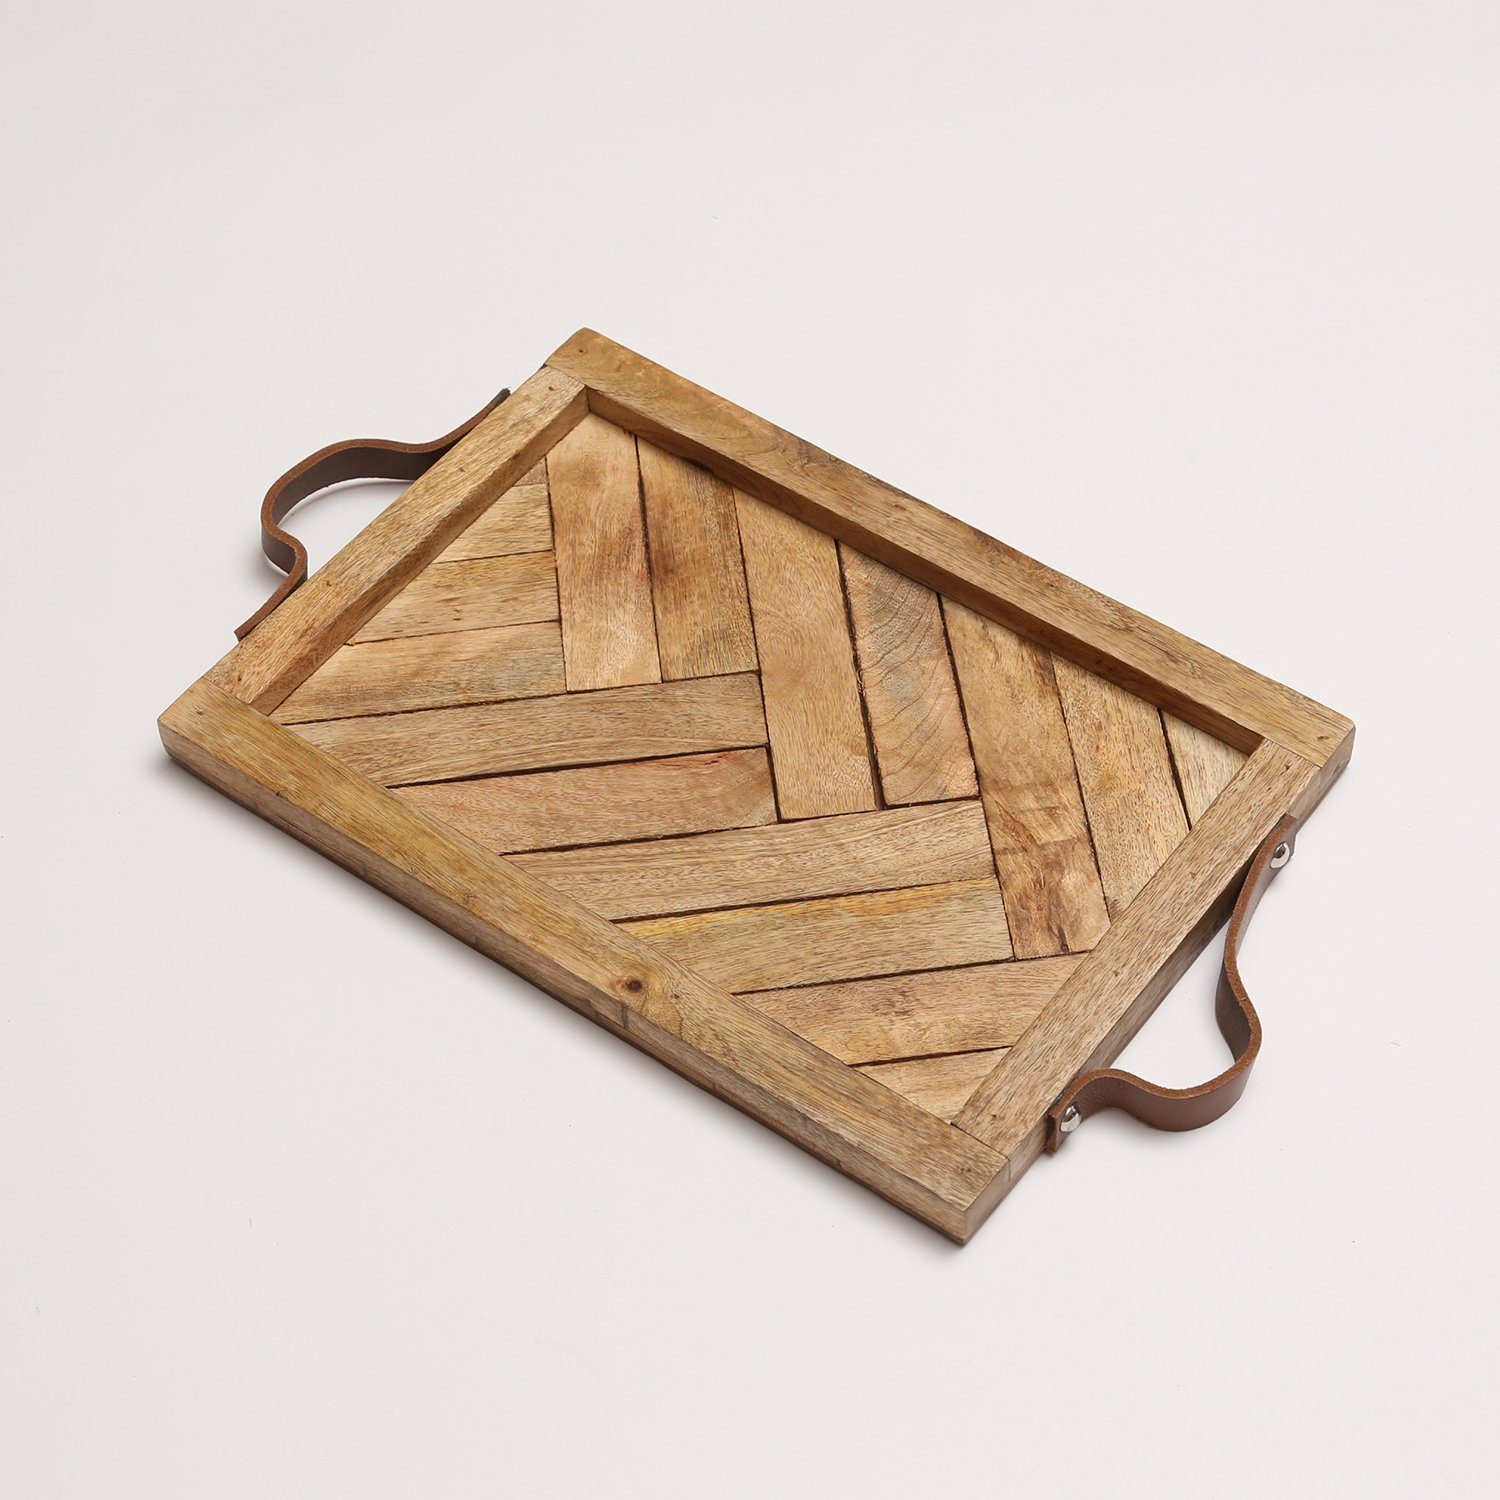 MARELIDA Dekotablett Tablett Holz Kerzentablett Serviertablett rechteckig Mangoholz 54cm